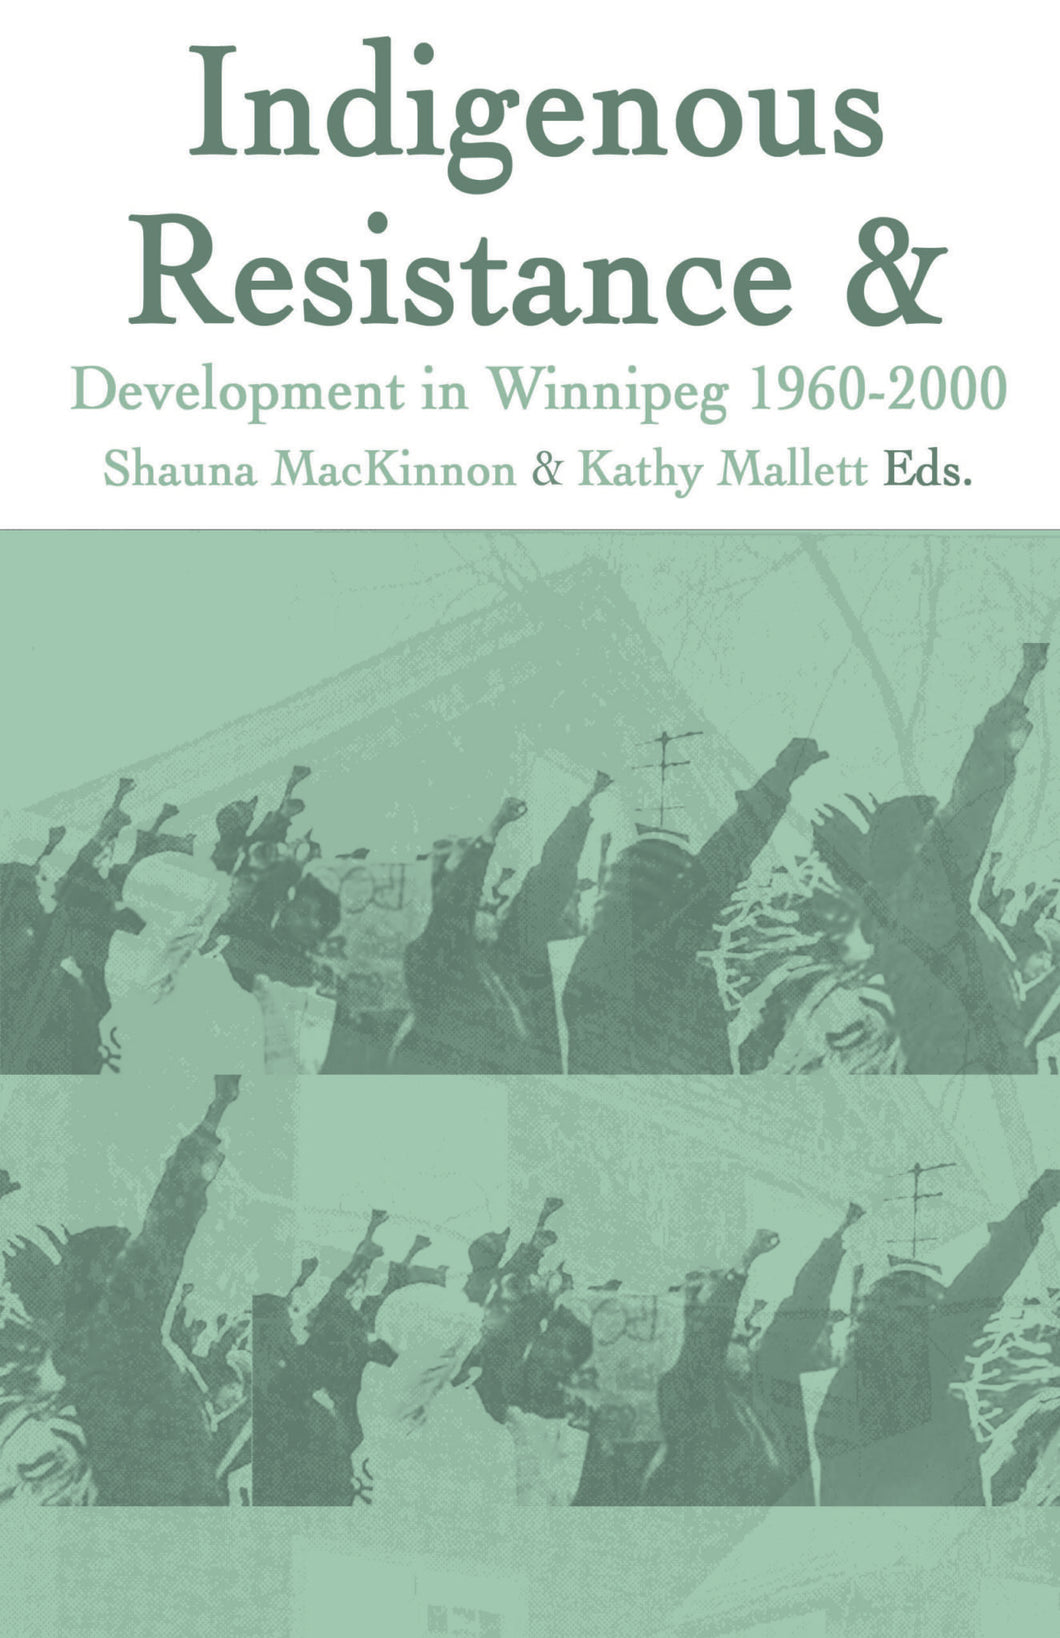 Indigenous Resistance and Development in Winnipeg: 1960-2000 [Edited by Shauna MacKinnon & Kathy Mallett]